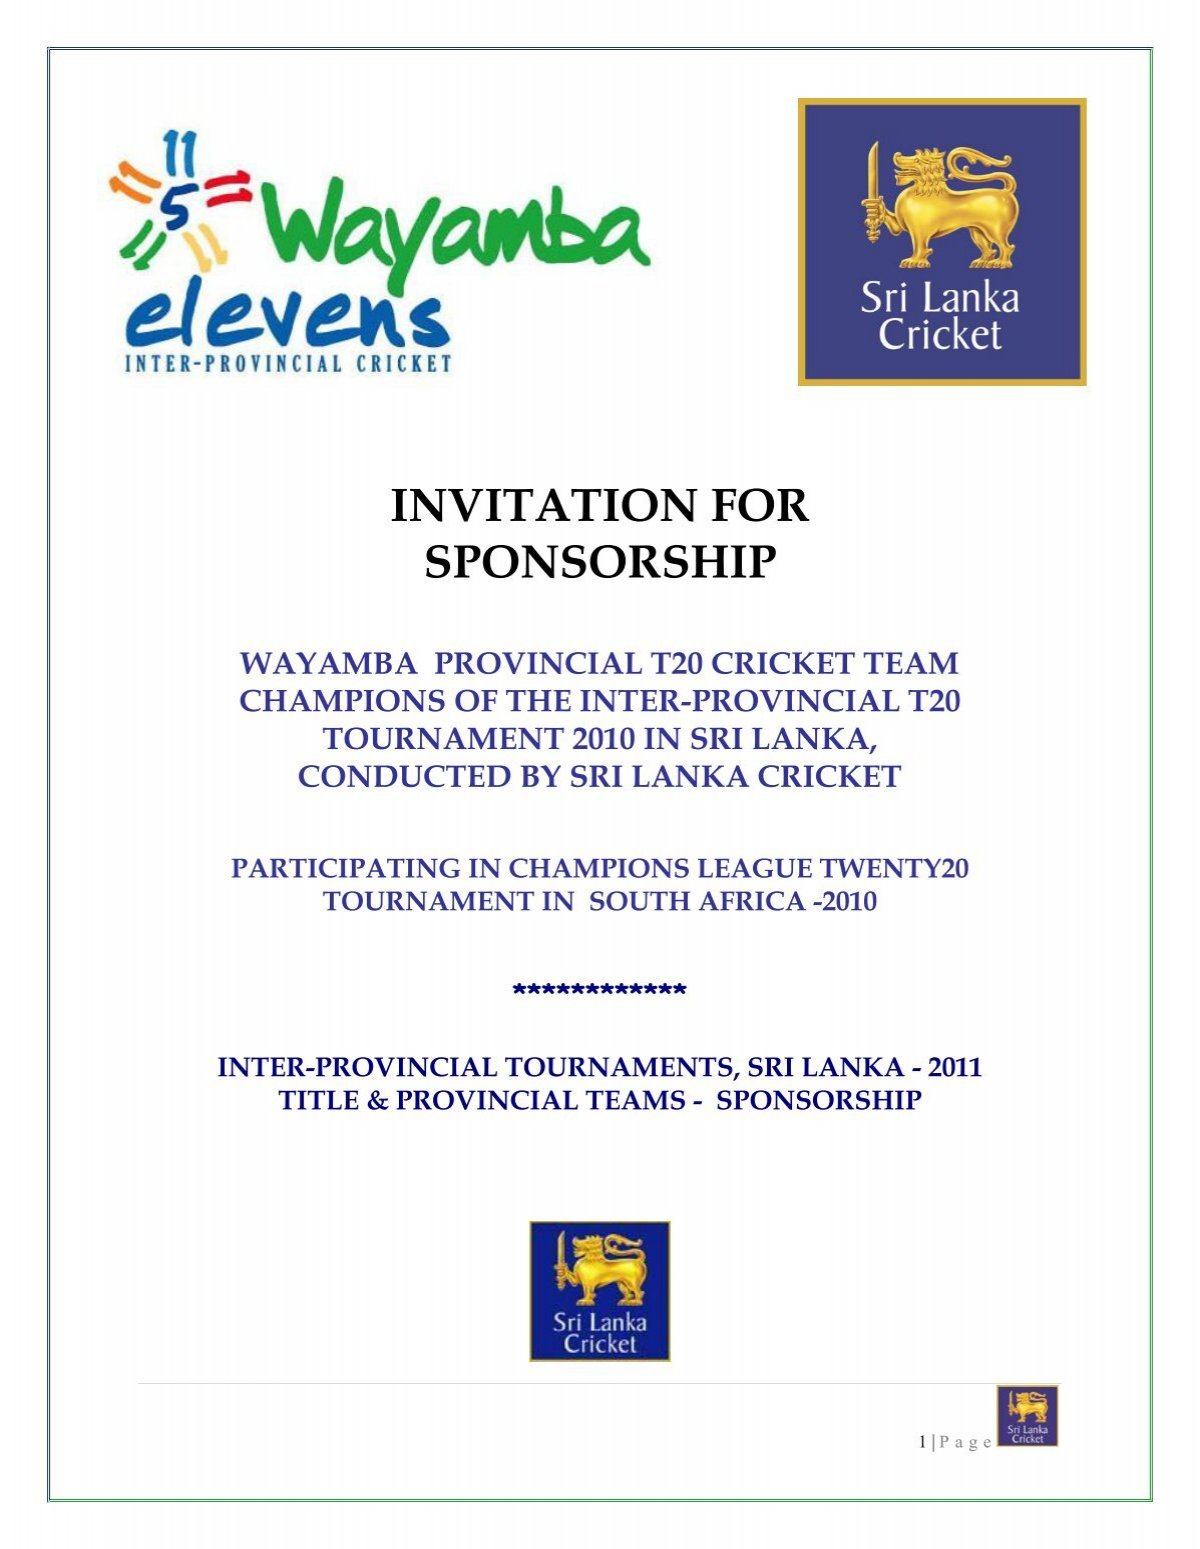 download-link-of-invitation-for-sponsorship-pdf-sri-lanka-cricket